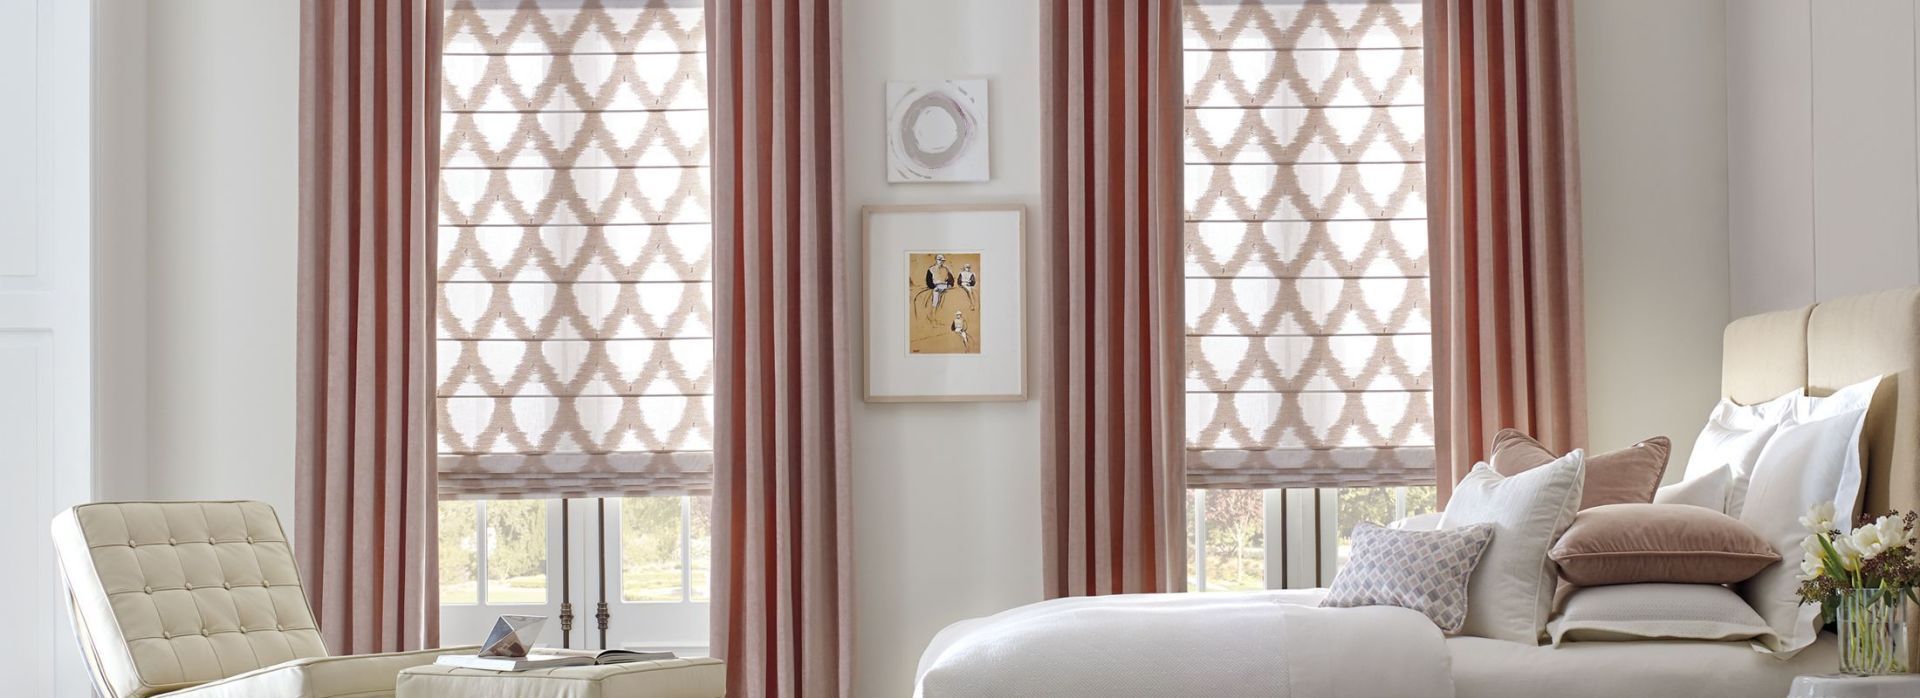 Motorized Hunter Douglas roman shade with custom drapery in traditional pink white modern bedroom Irvine